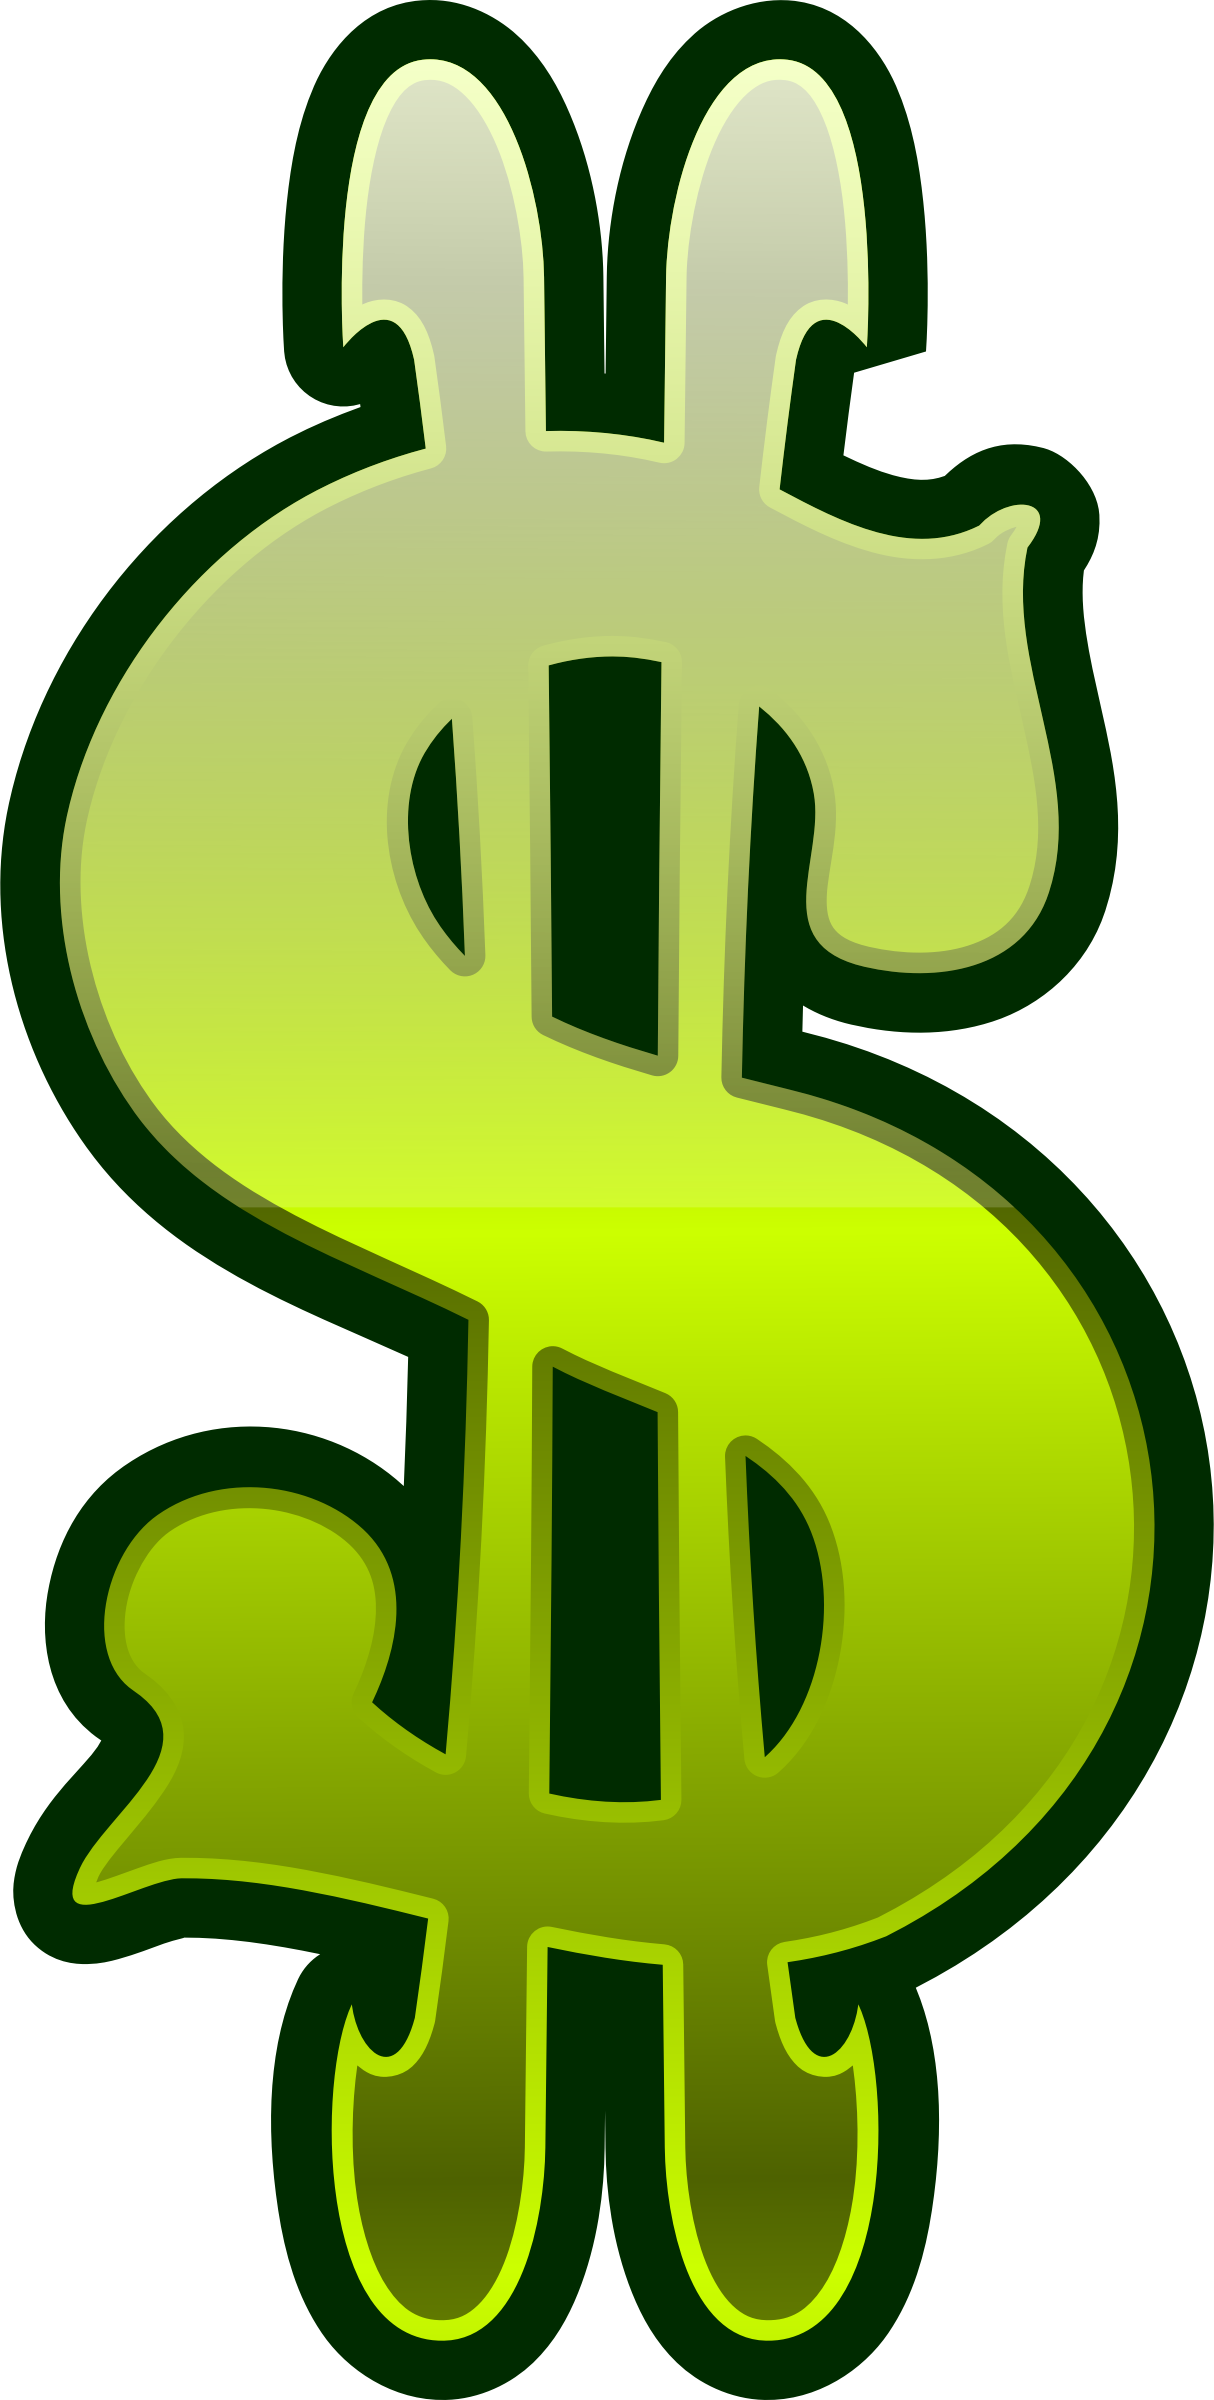 Green Slot Machine Dollar Sign vector clipart image - Free ... - Graffiti Money Bag Drawings